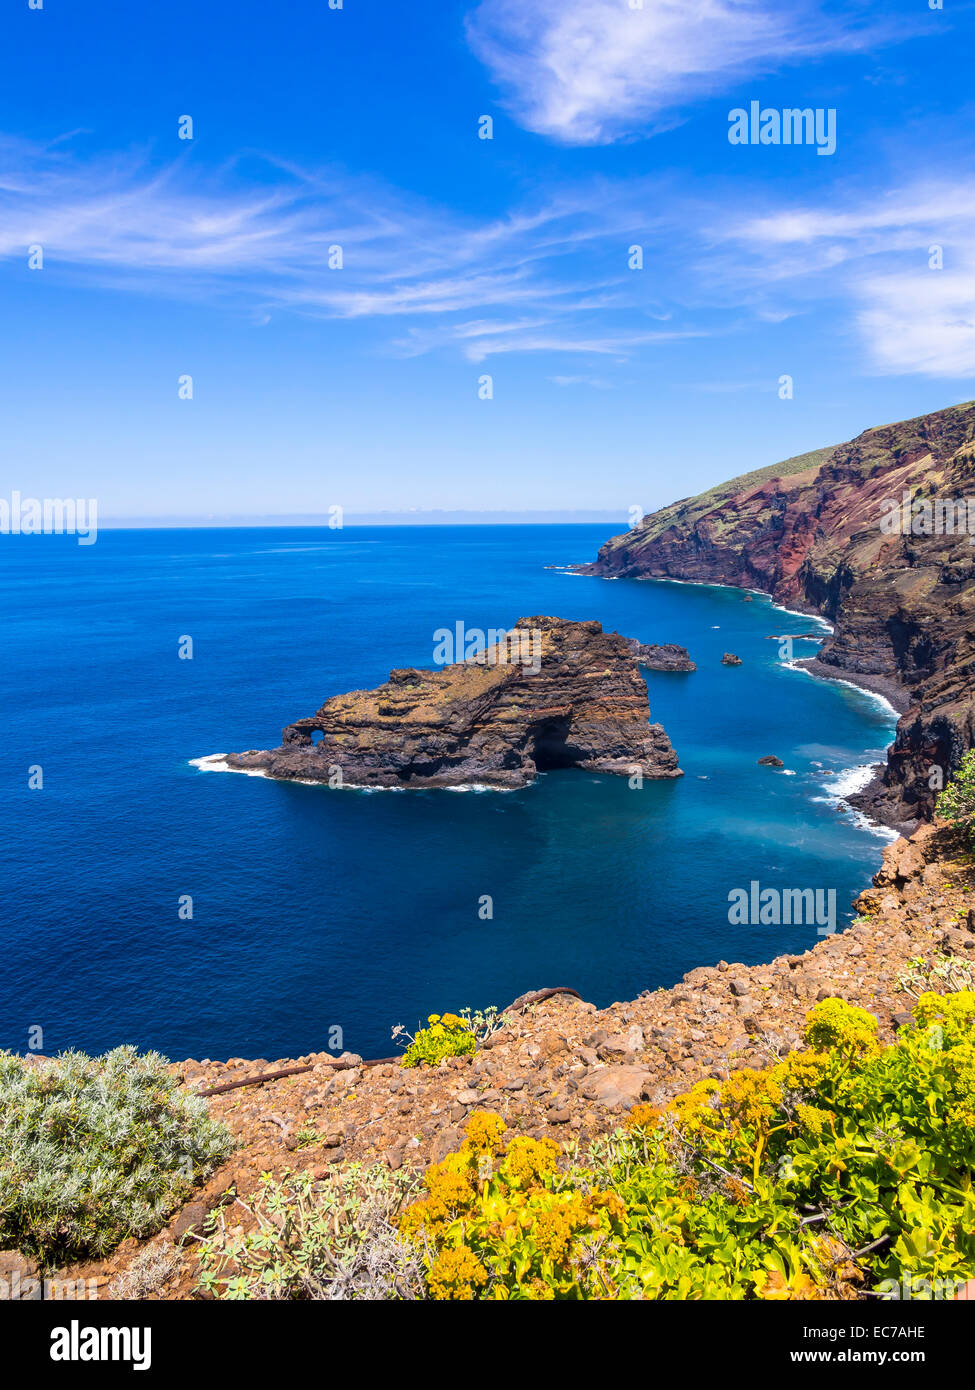 Spain, Canary Islands, La Palma, cliff coast at Garafia Stock Photo